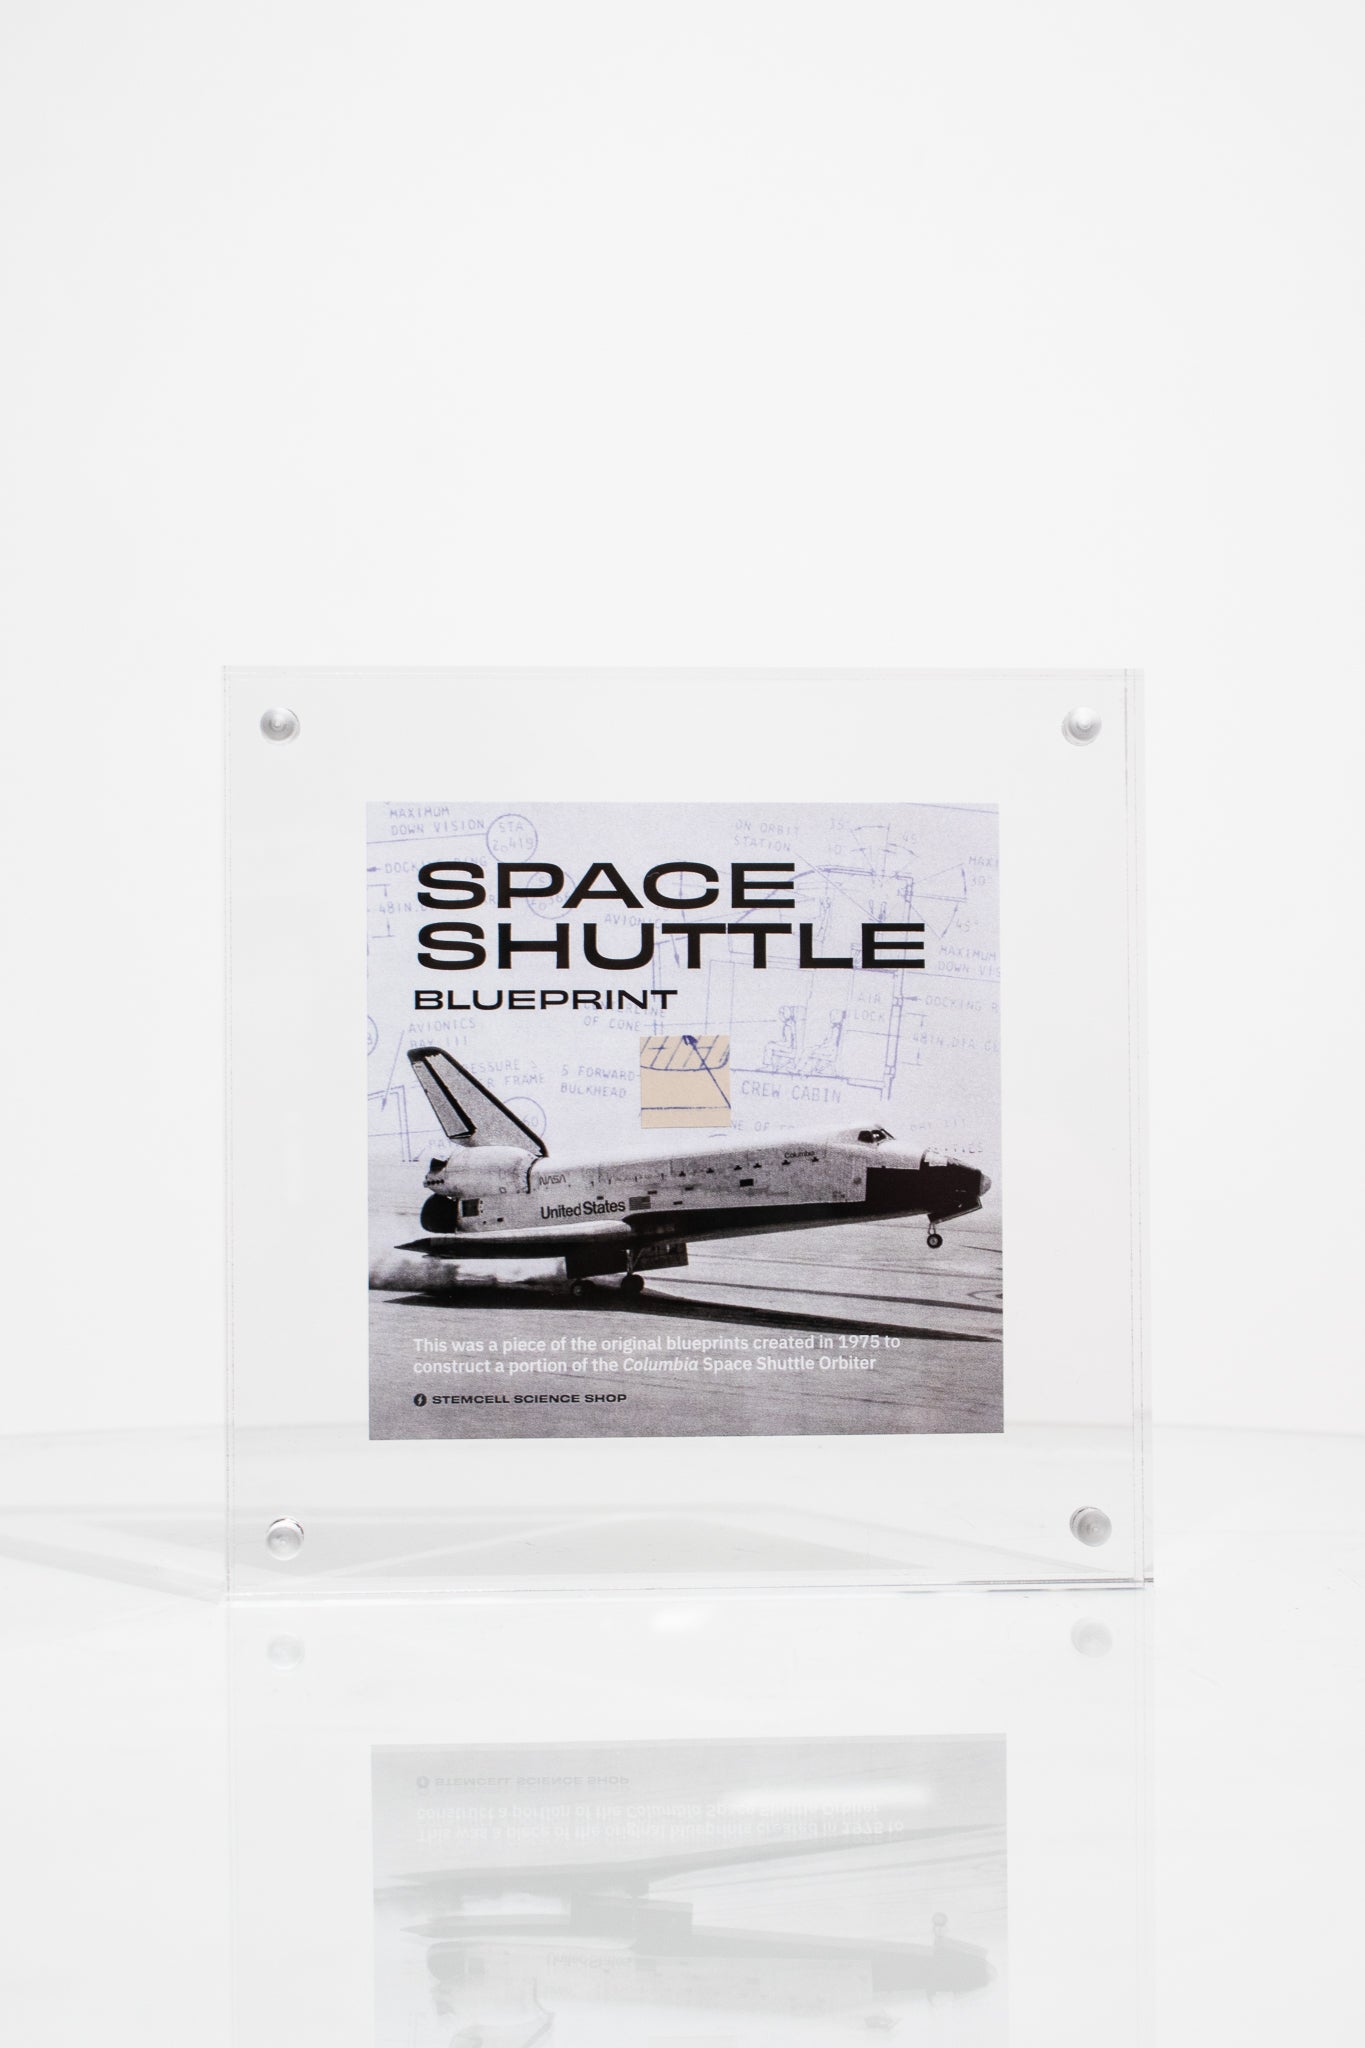 NASA Space Shuttle Blueprint - Stemcell Science Shop